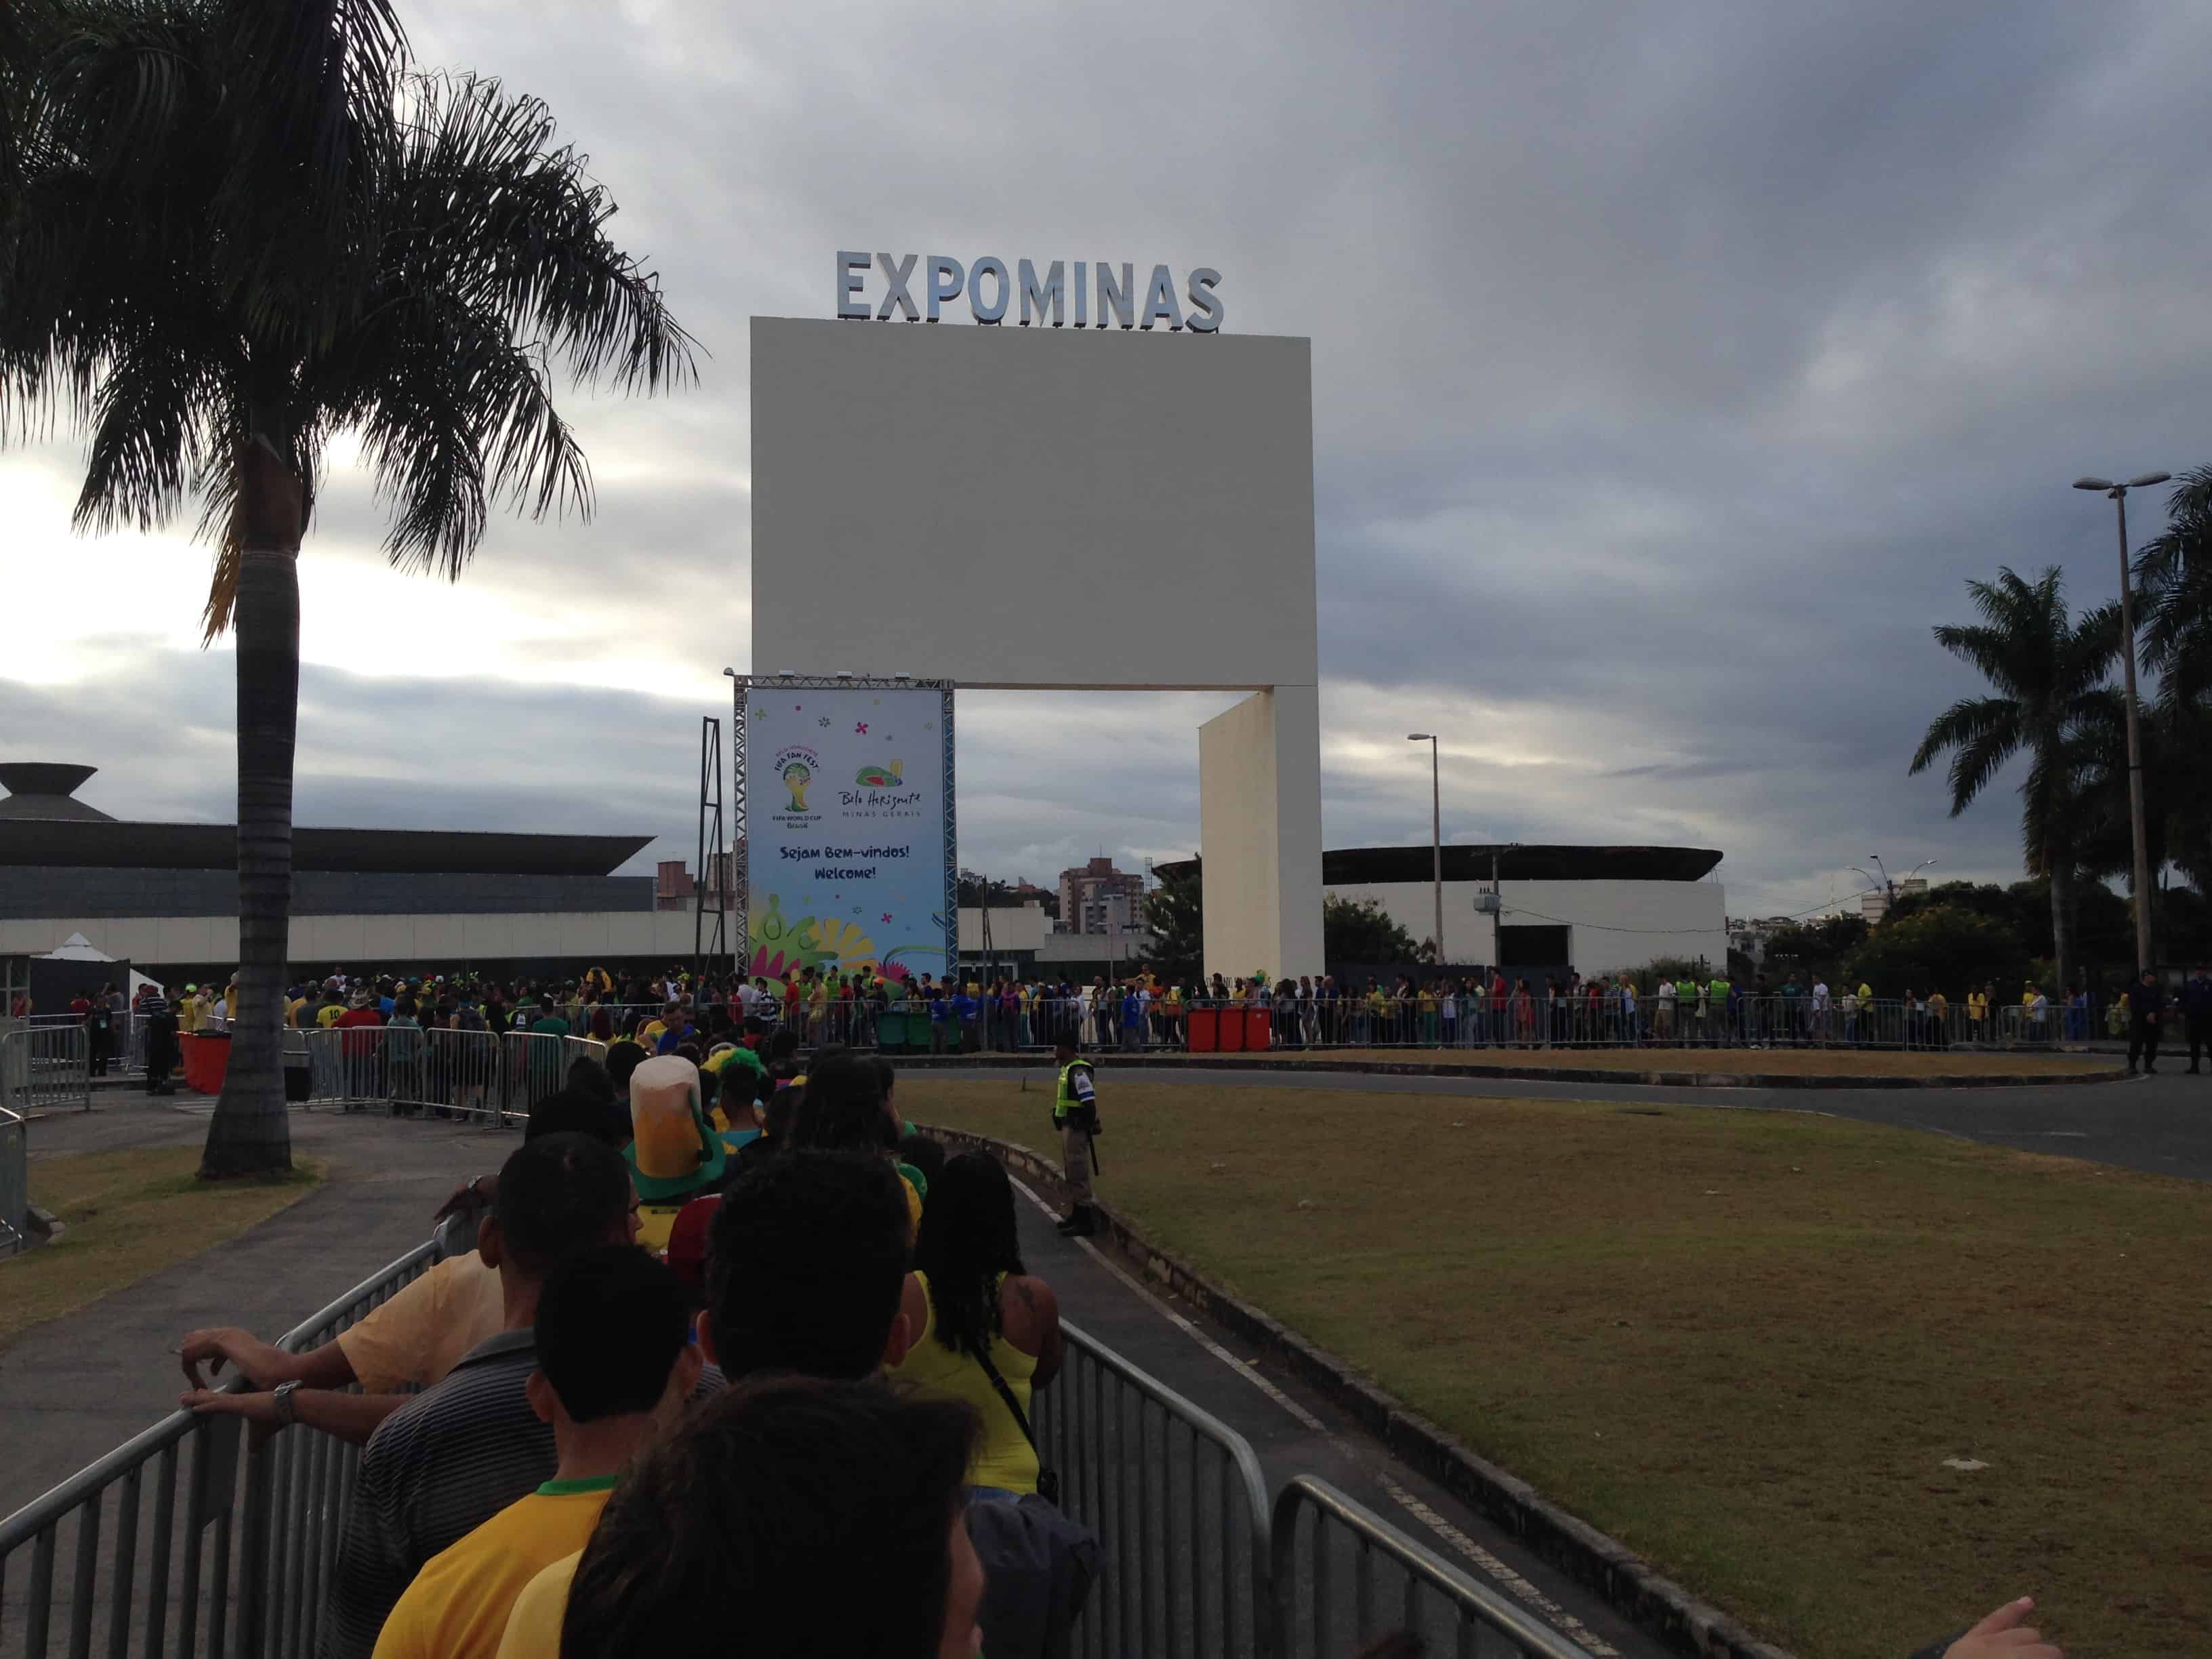 Expominas FIFA Fan Fest in Belo Horizonte, Brazil 2014 World Cup